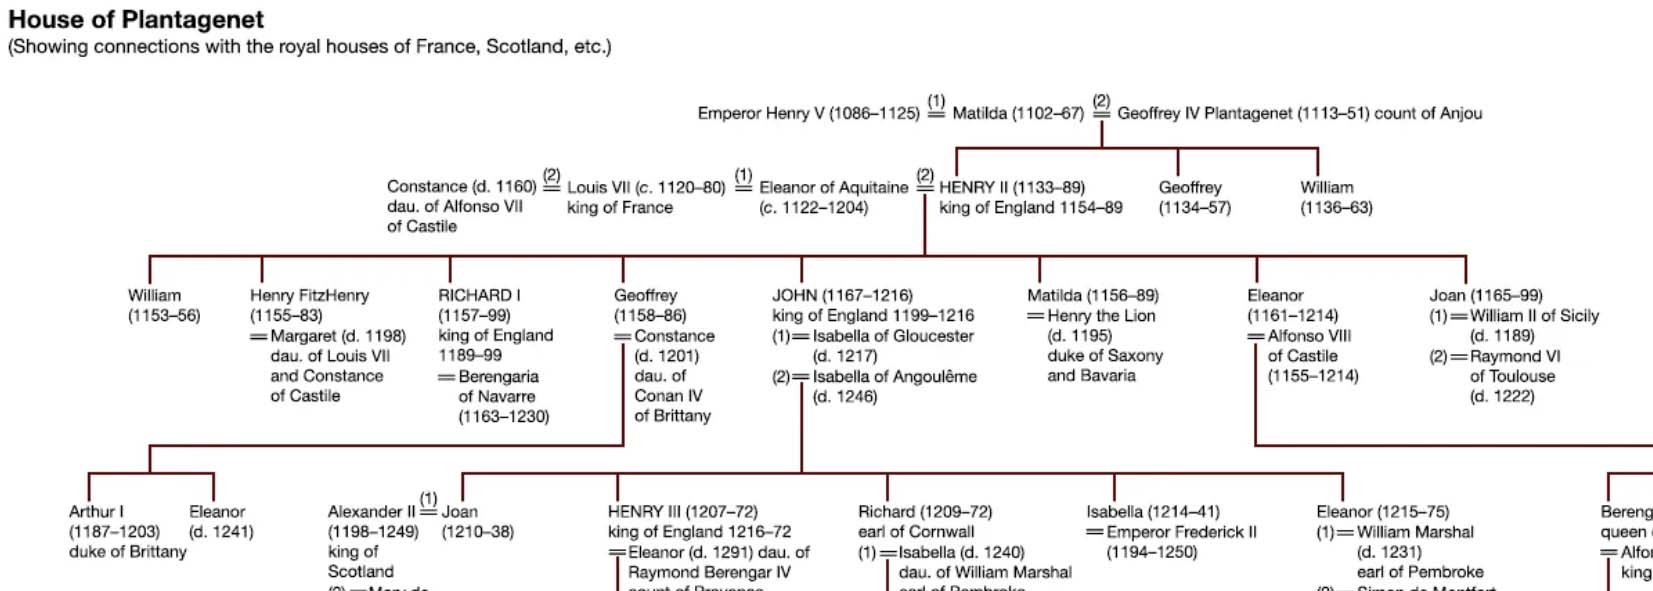 Portion of the Plantagenet family tree